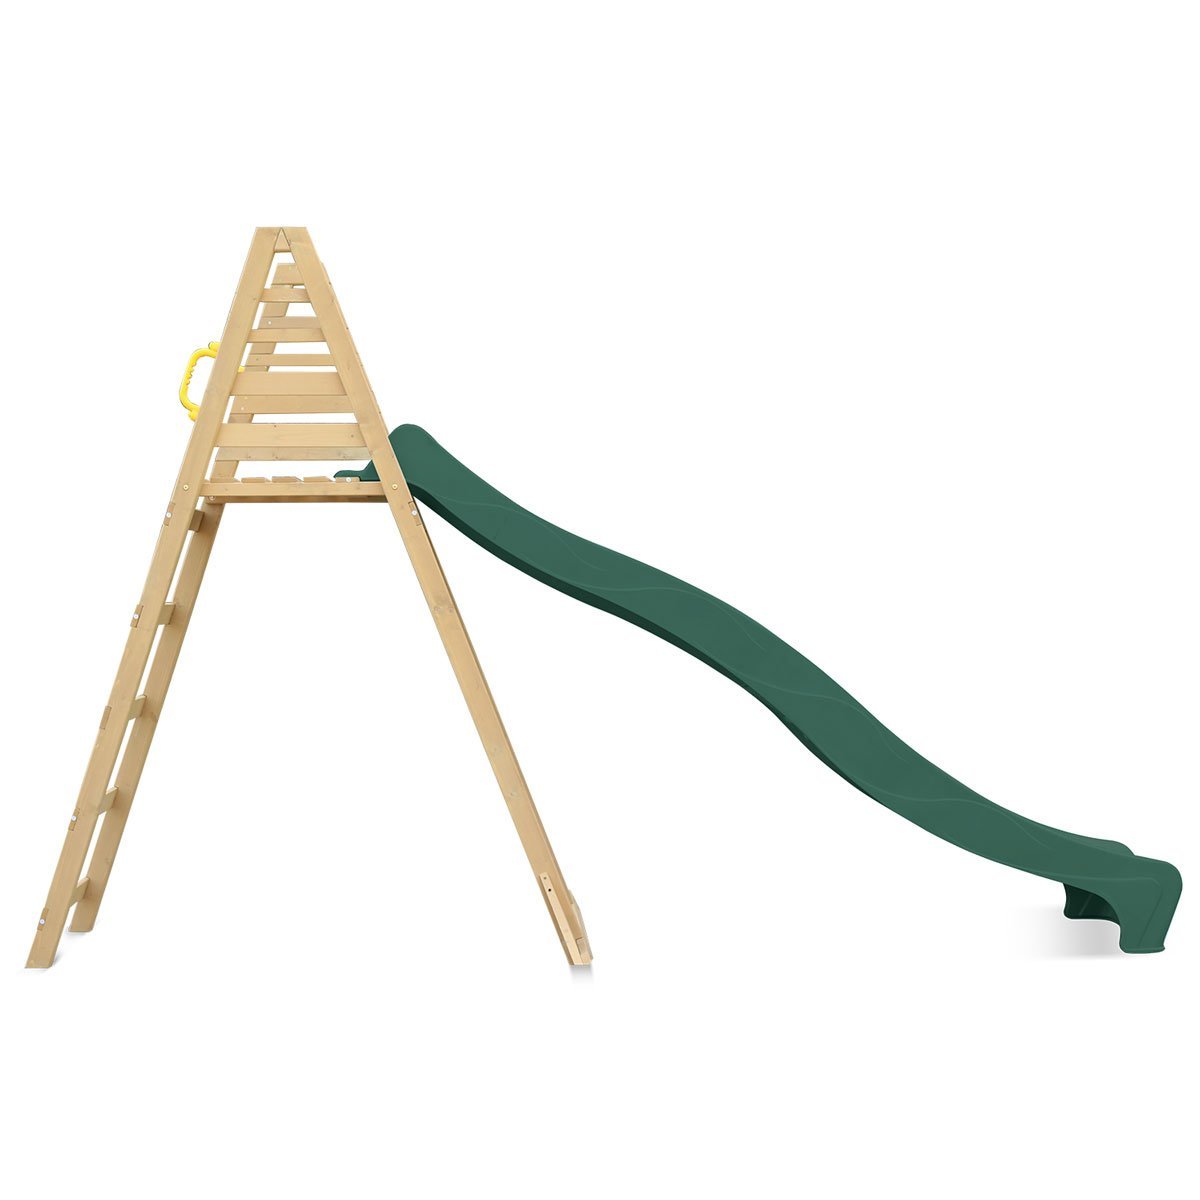 Green sunshine slide with sturdy wood ladder